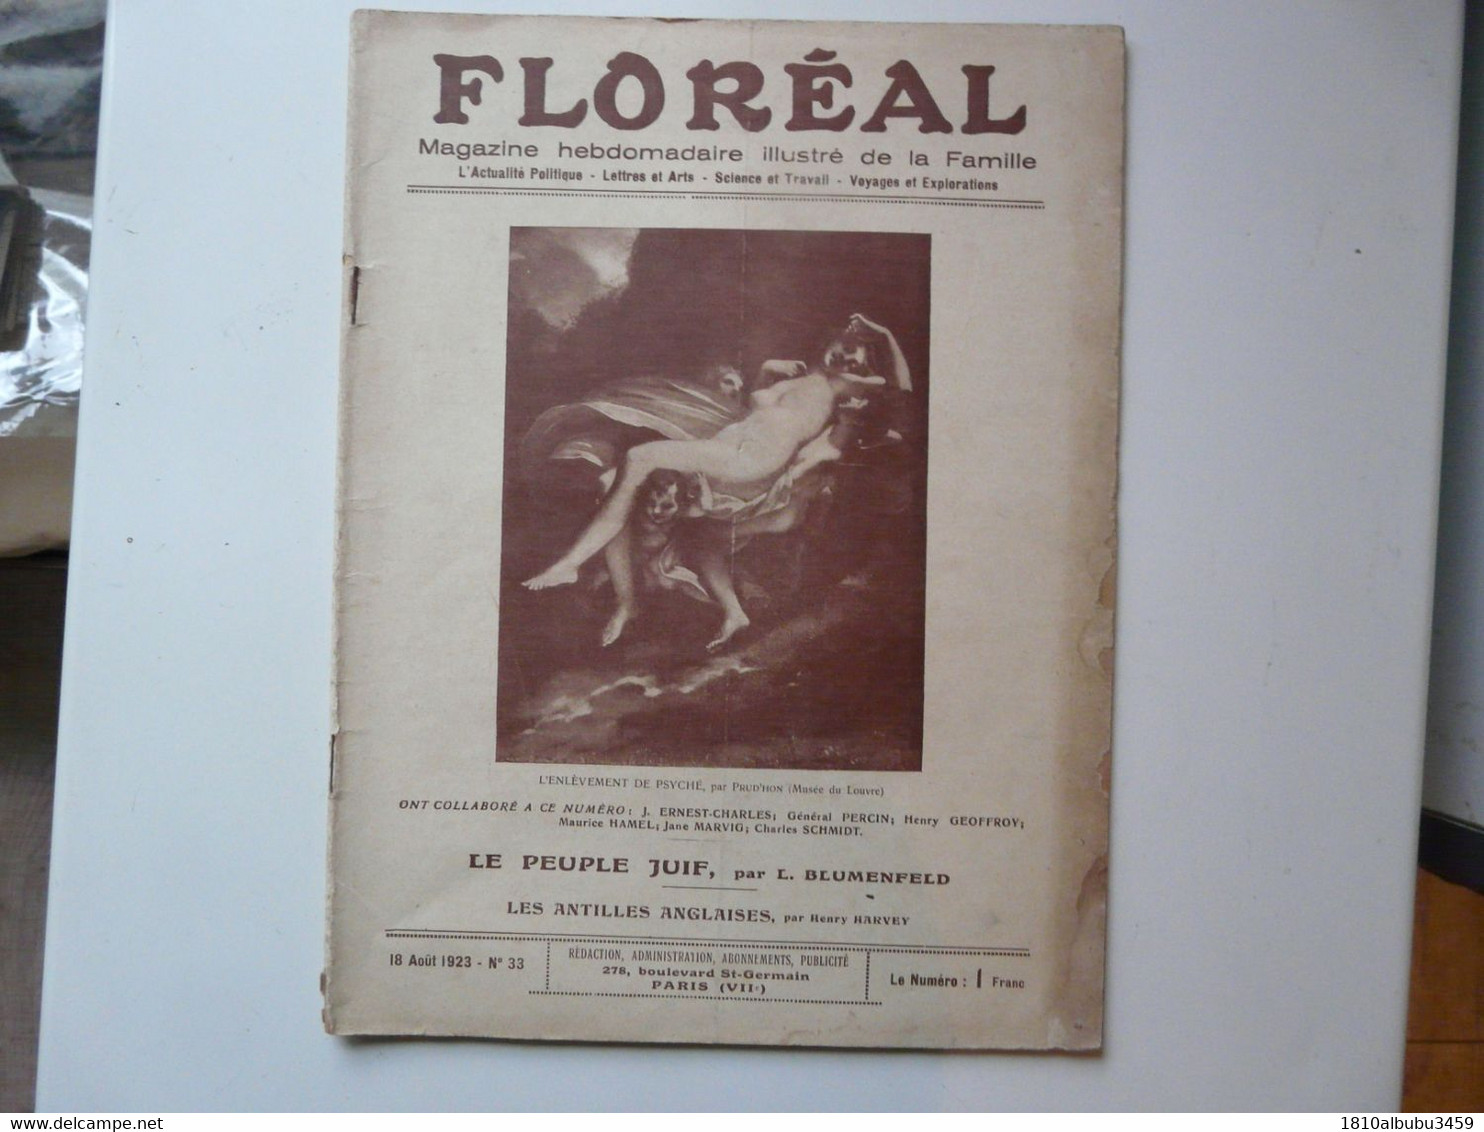 FLOREAL - MAGAZINE HEBDOMADAIRE ILLUSTRE DE LA FAMILLE 1923 - Sociologia